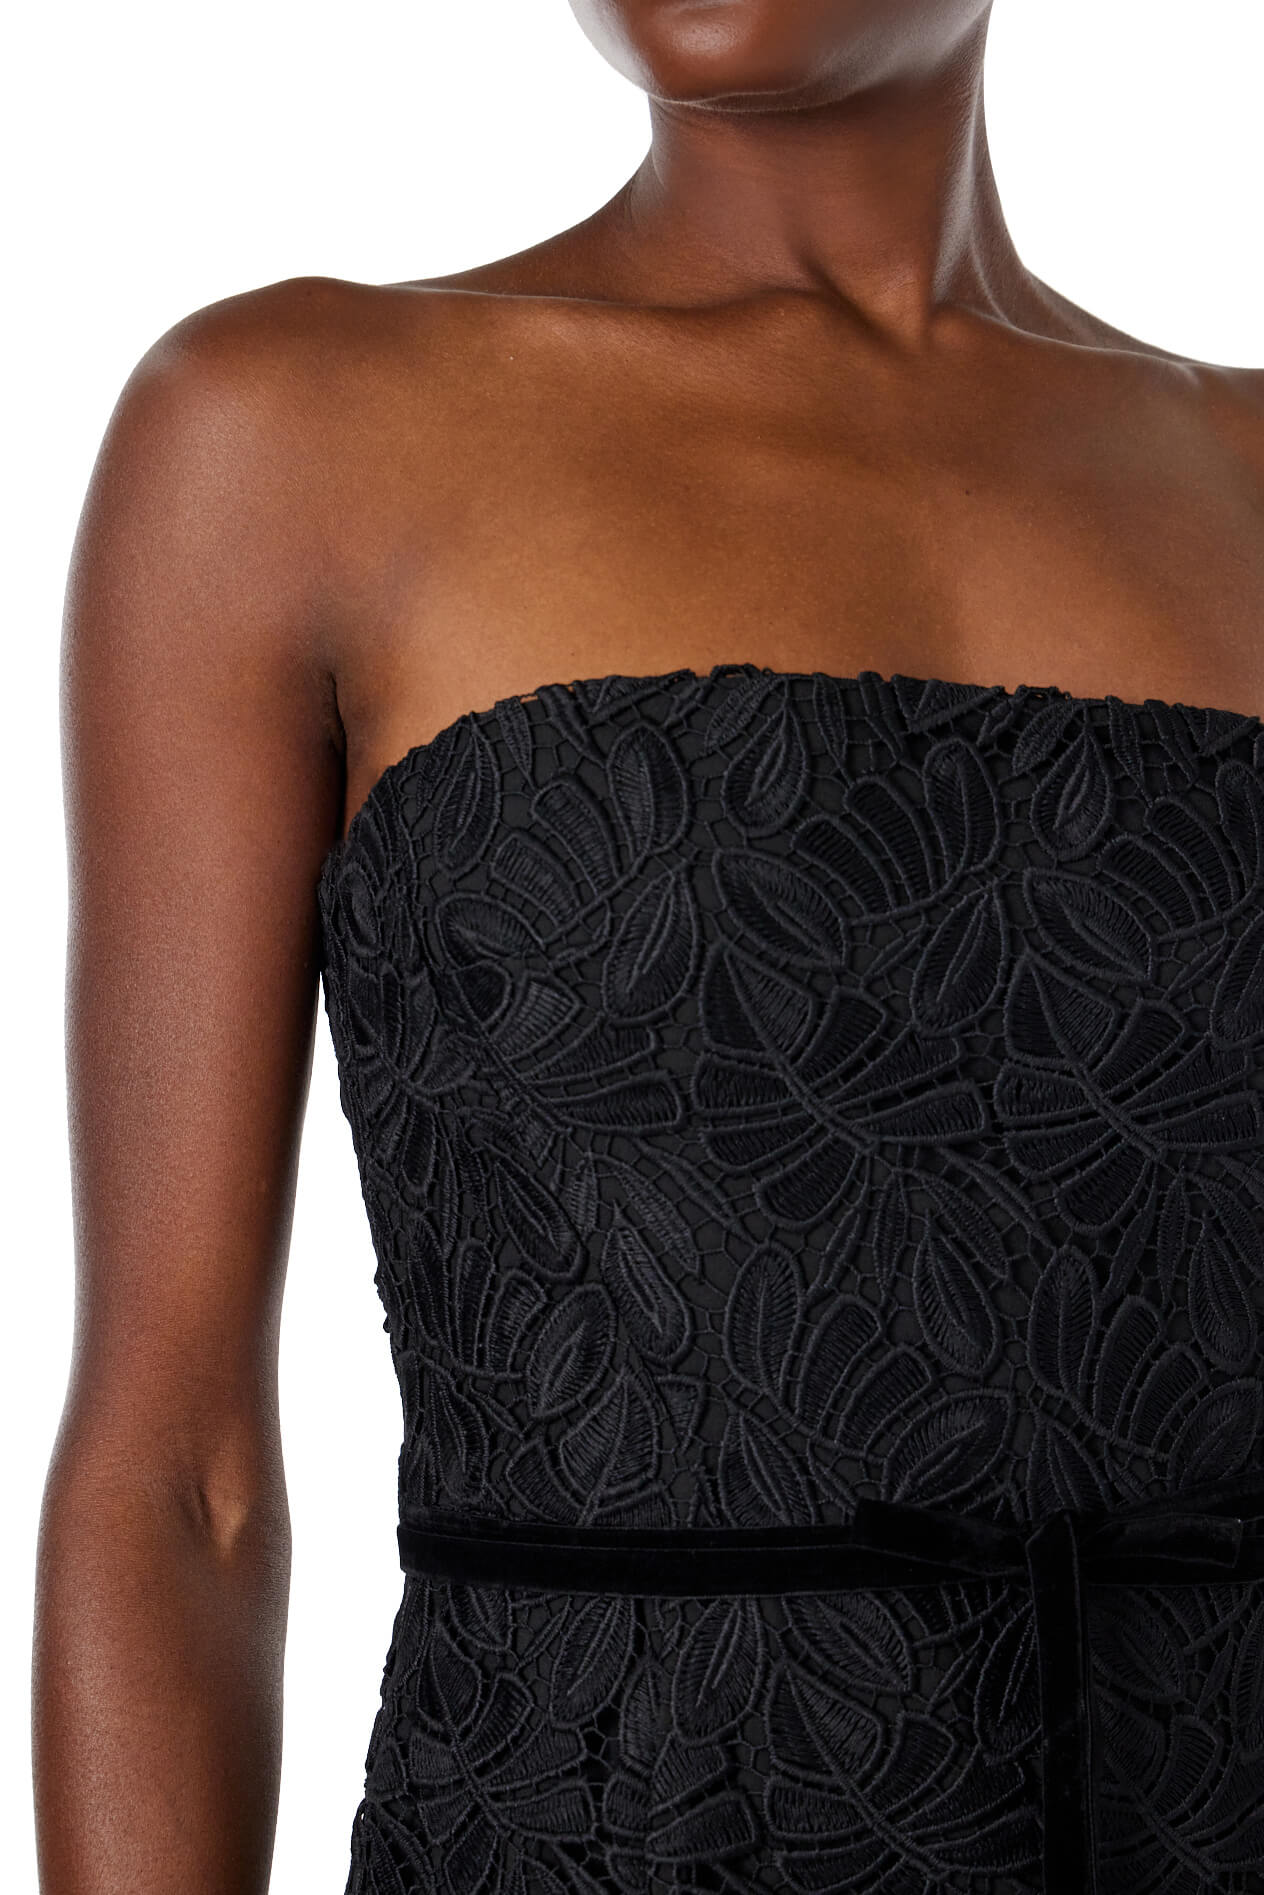 ML Monique Lhuillier strapless black lace dress with ribbon accent at waist.